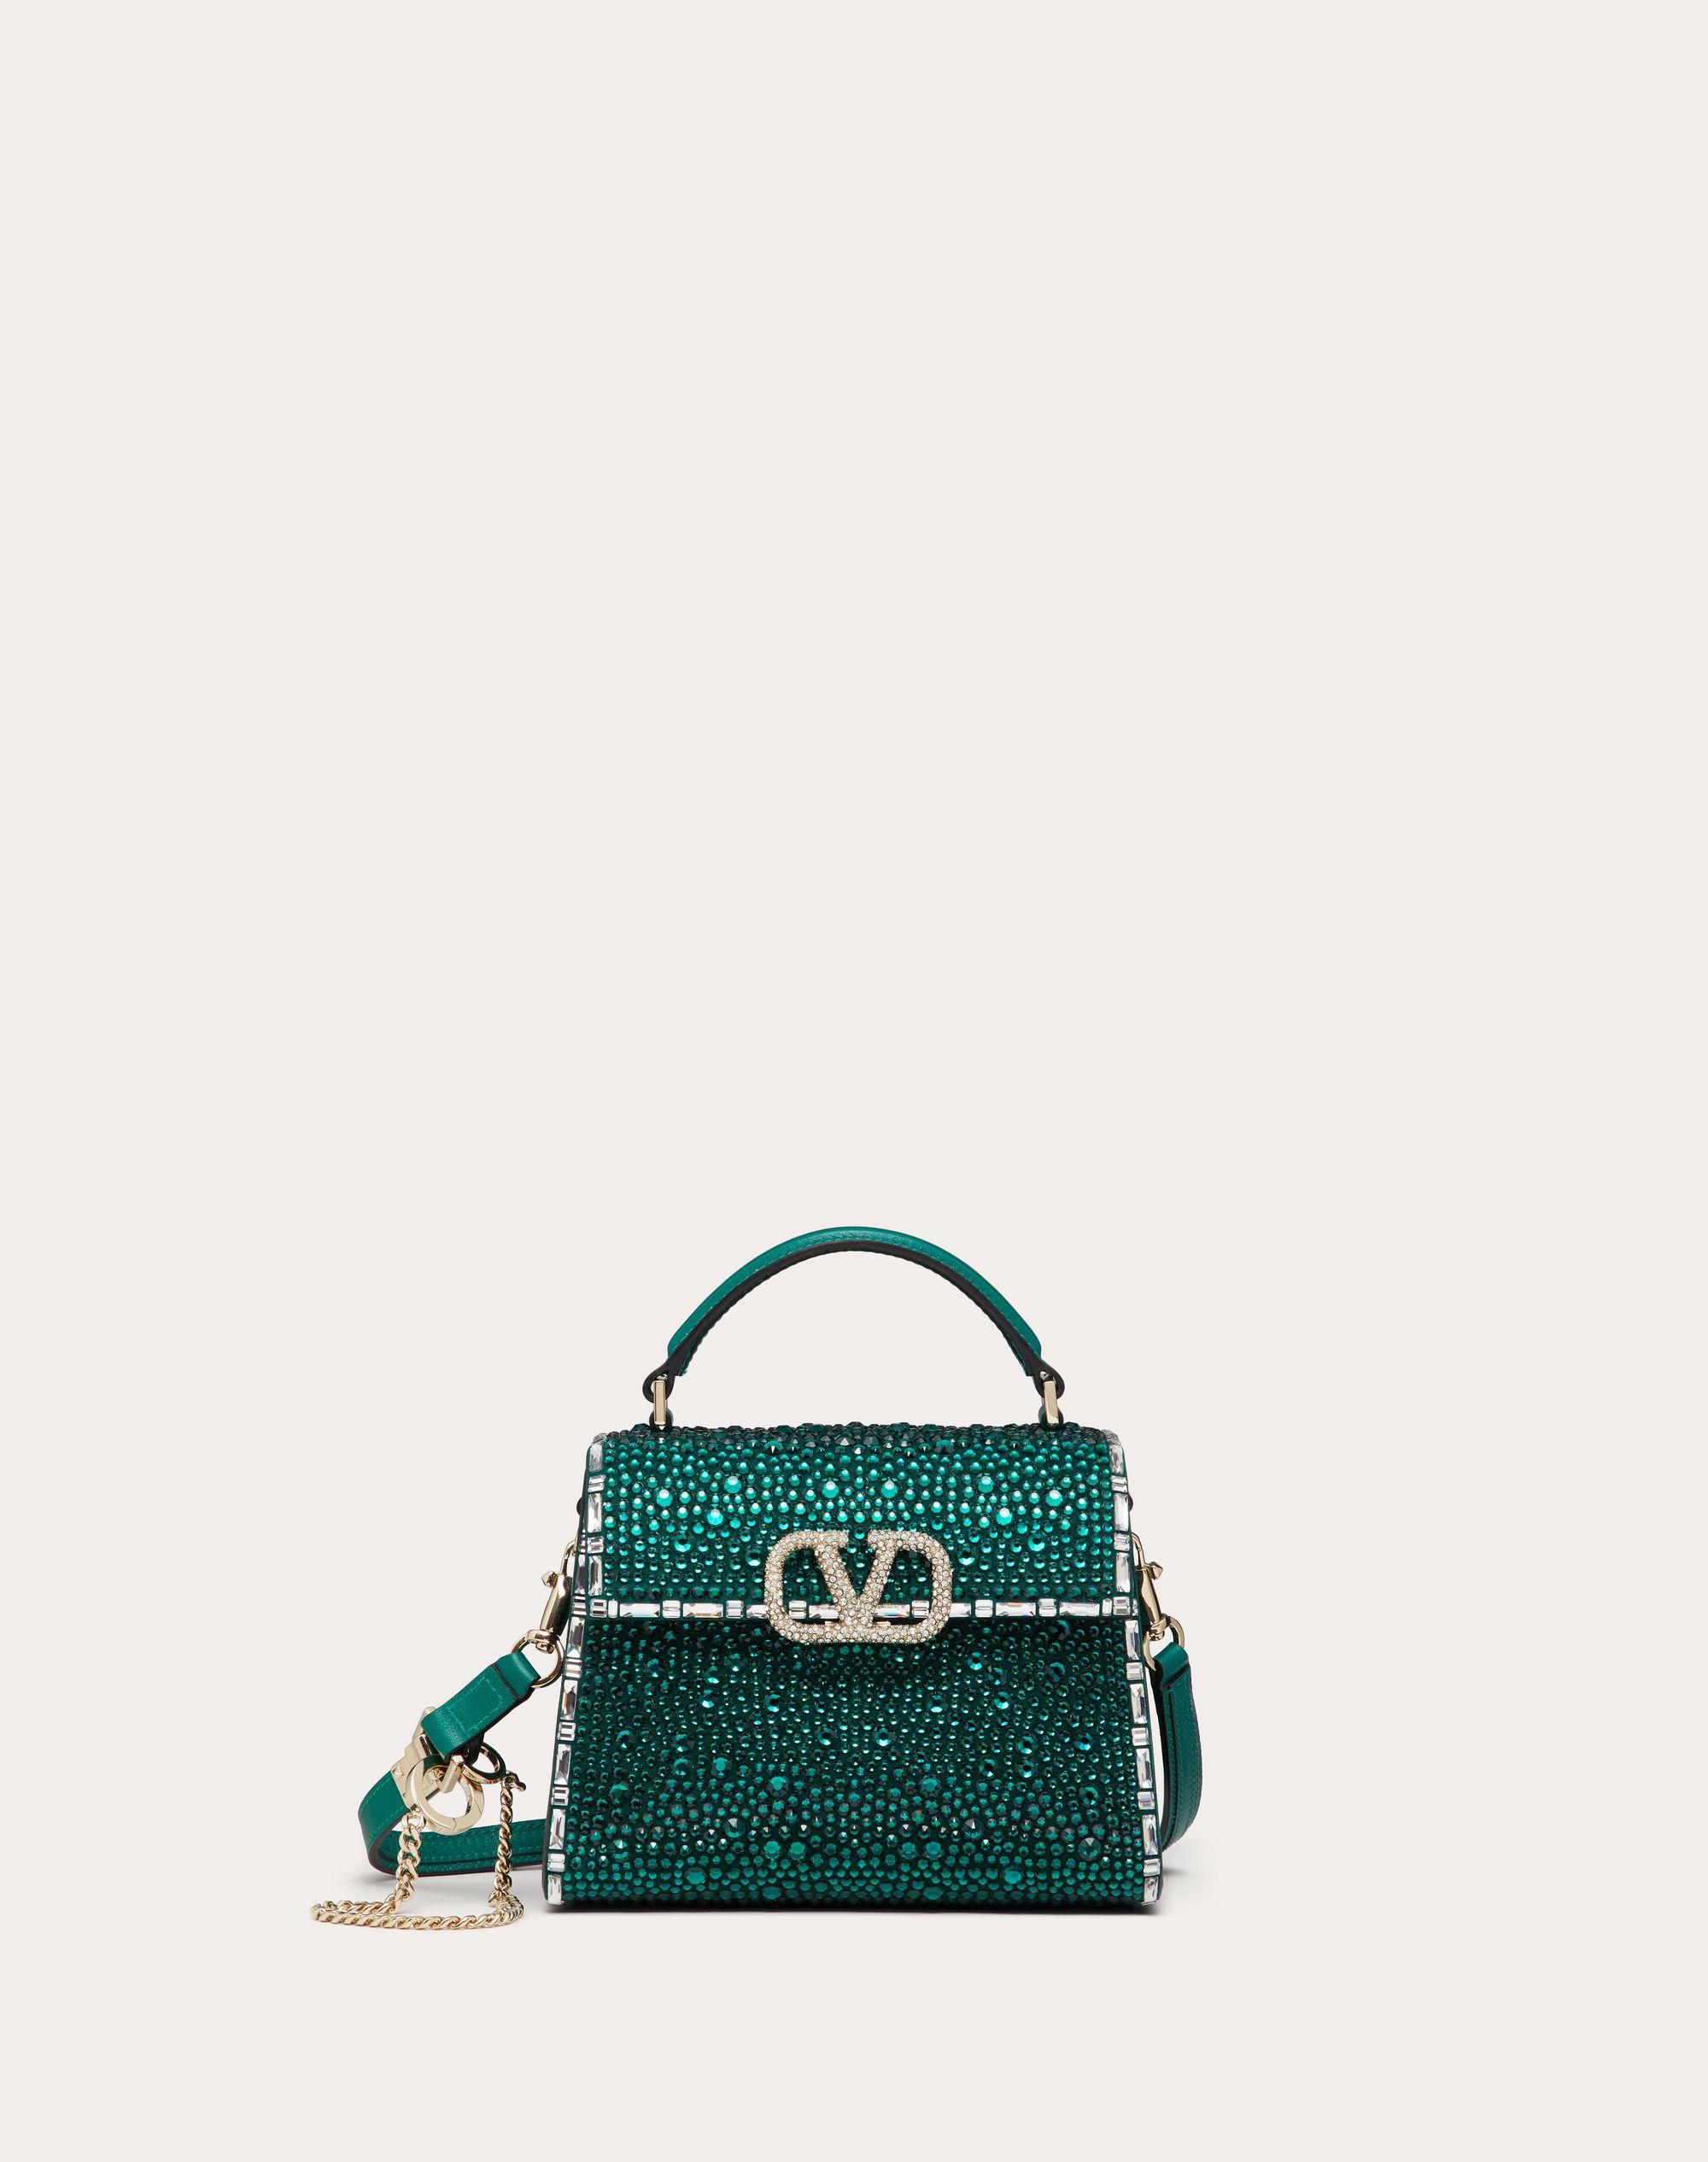 Valentino Garavani Small Vsling Handbag With Jewel Logo in Natural